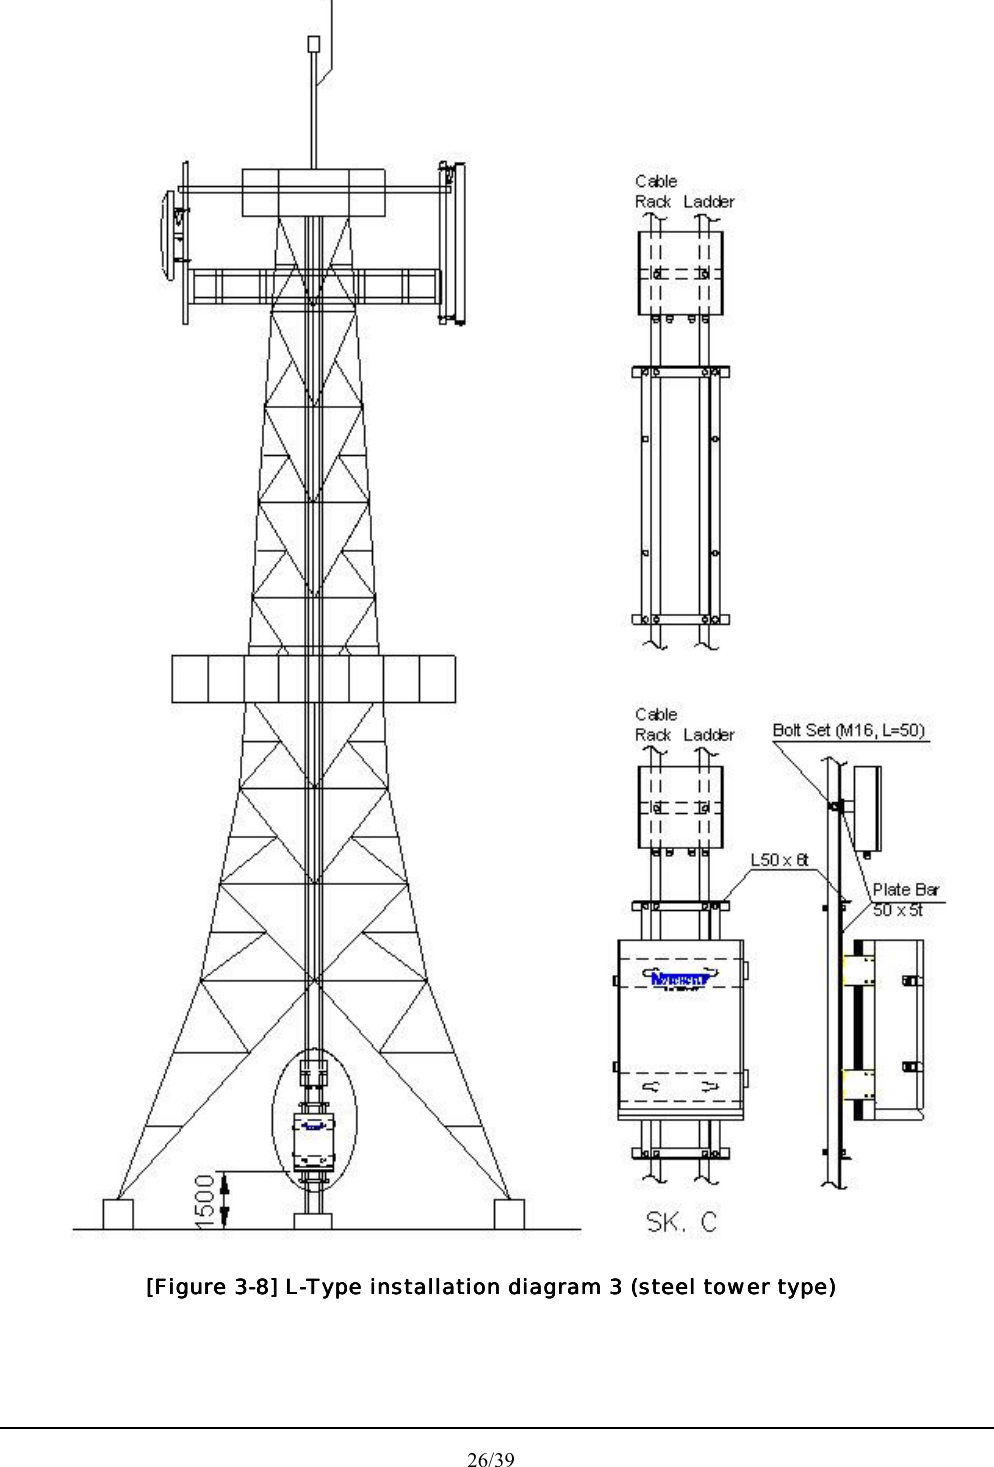  26/39  [Figure 3[Figure 3[Figure 3[Figure 3----8] L8] L8] L8] L----Type installation diagram 3 (steel tower type)Type installation diagram 3 (steel tower type)Type installation diagram 3 (steel tower type)Type installation diagram 3 (steel tower type)      